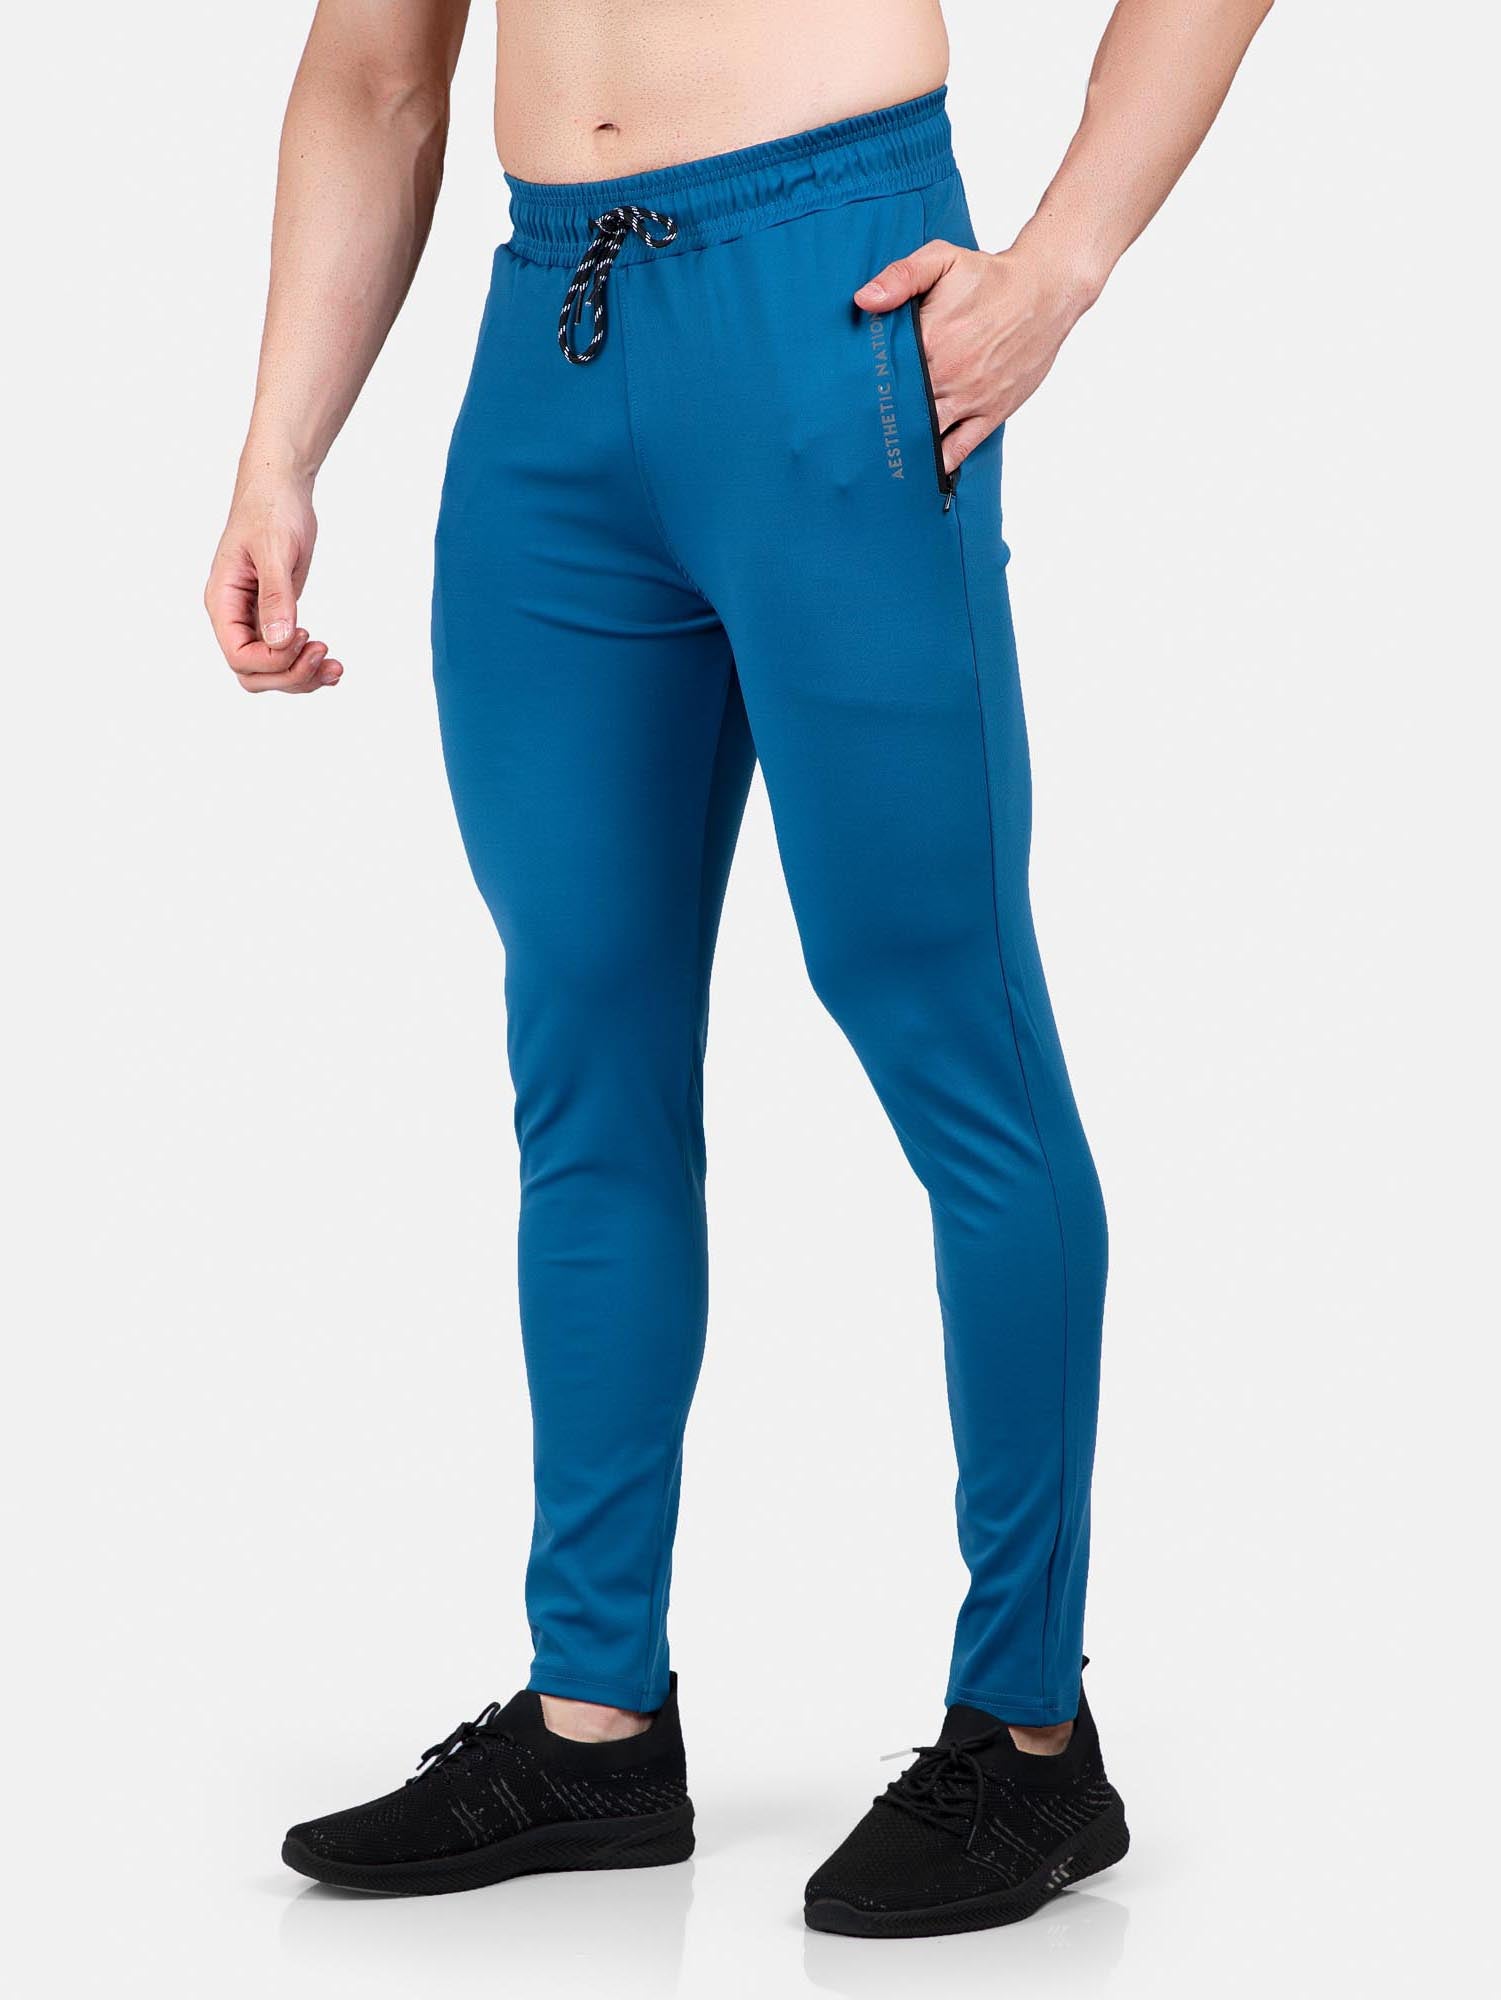 Buy Black Trousers & Pants for Men by INDIGO NATION Online | Ajio.com